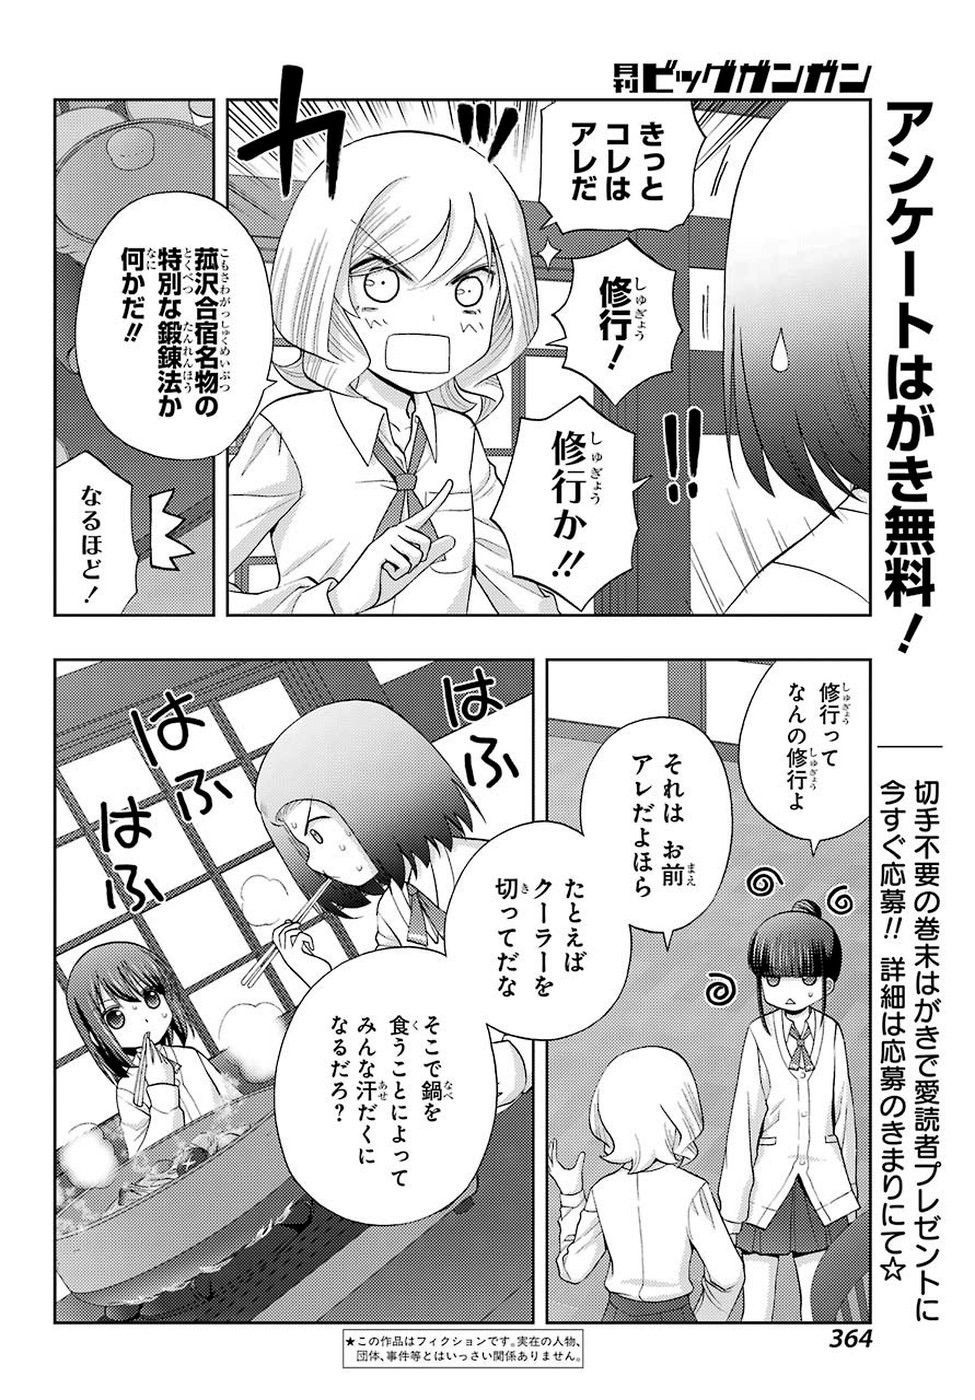 Shinohayu - The Dawn of Age Manga - Chapter 074 - Page 2